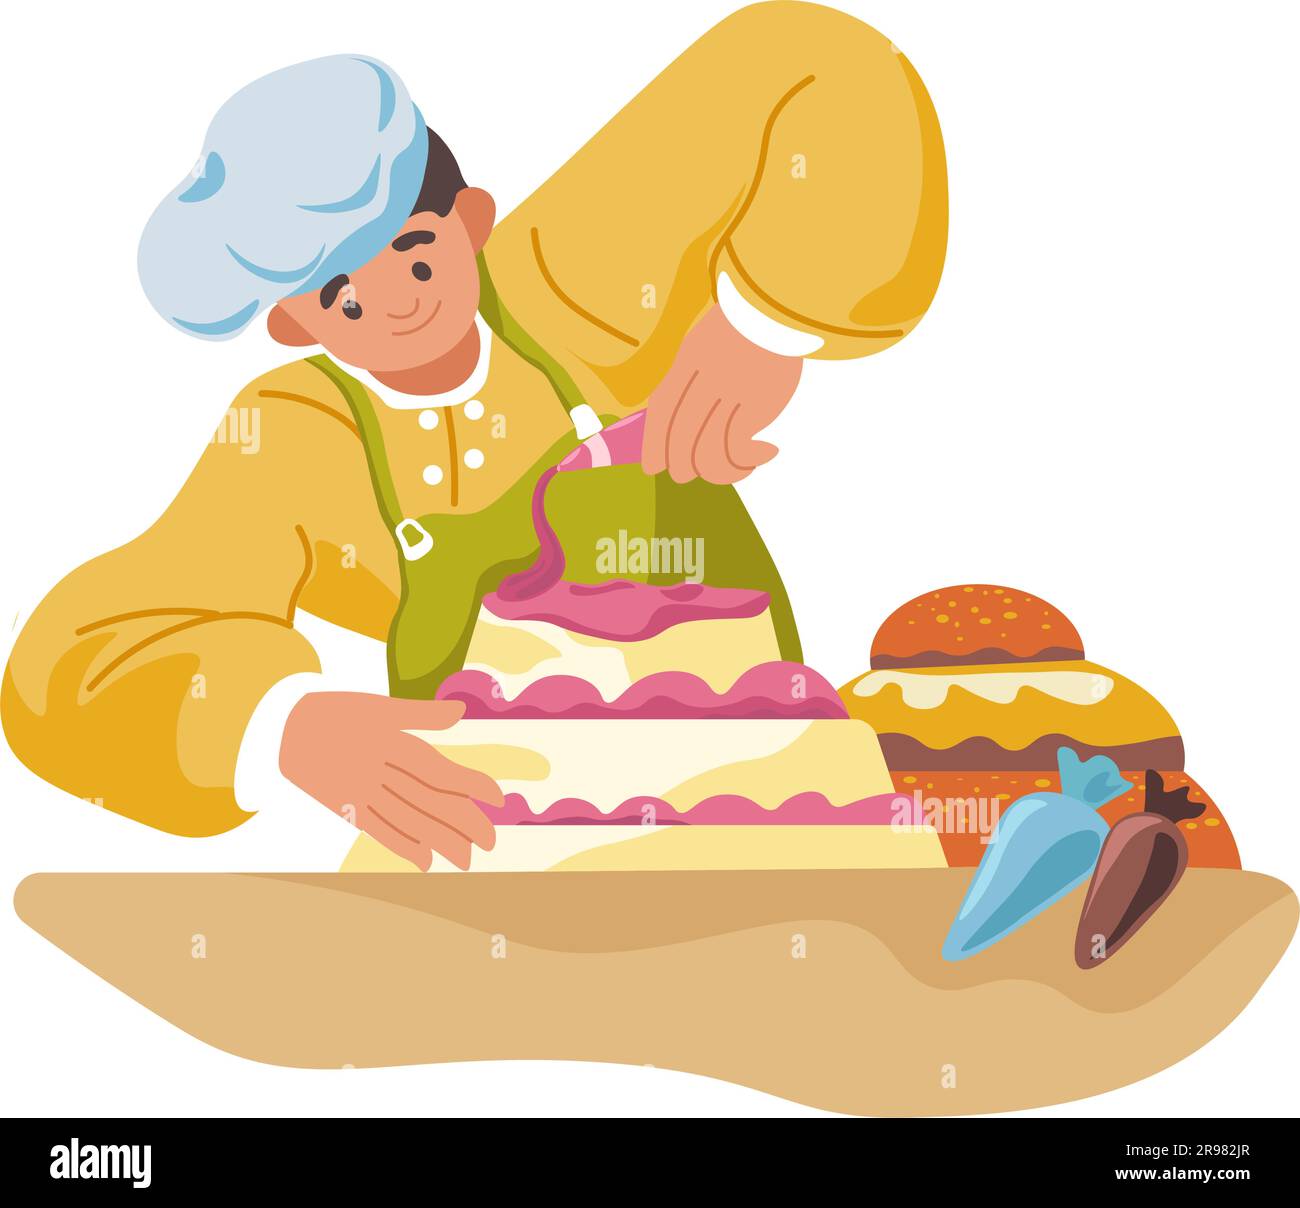 Cook preparing cake, bakery or restaurant vector Stock Vector